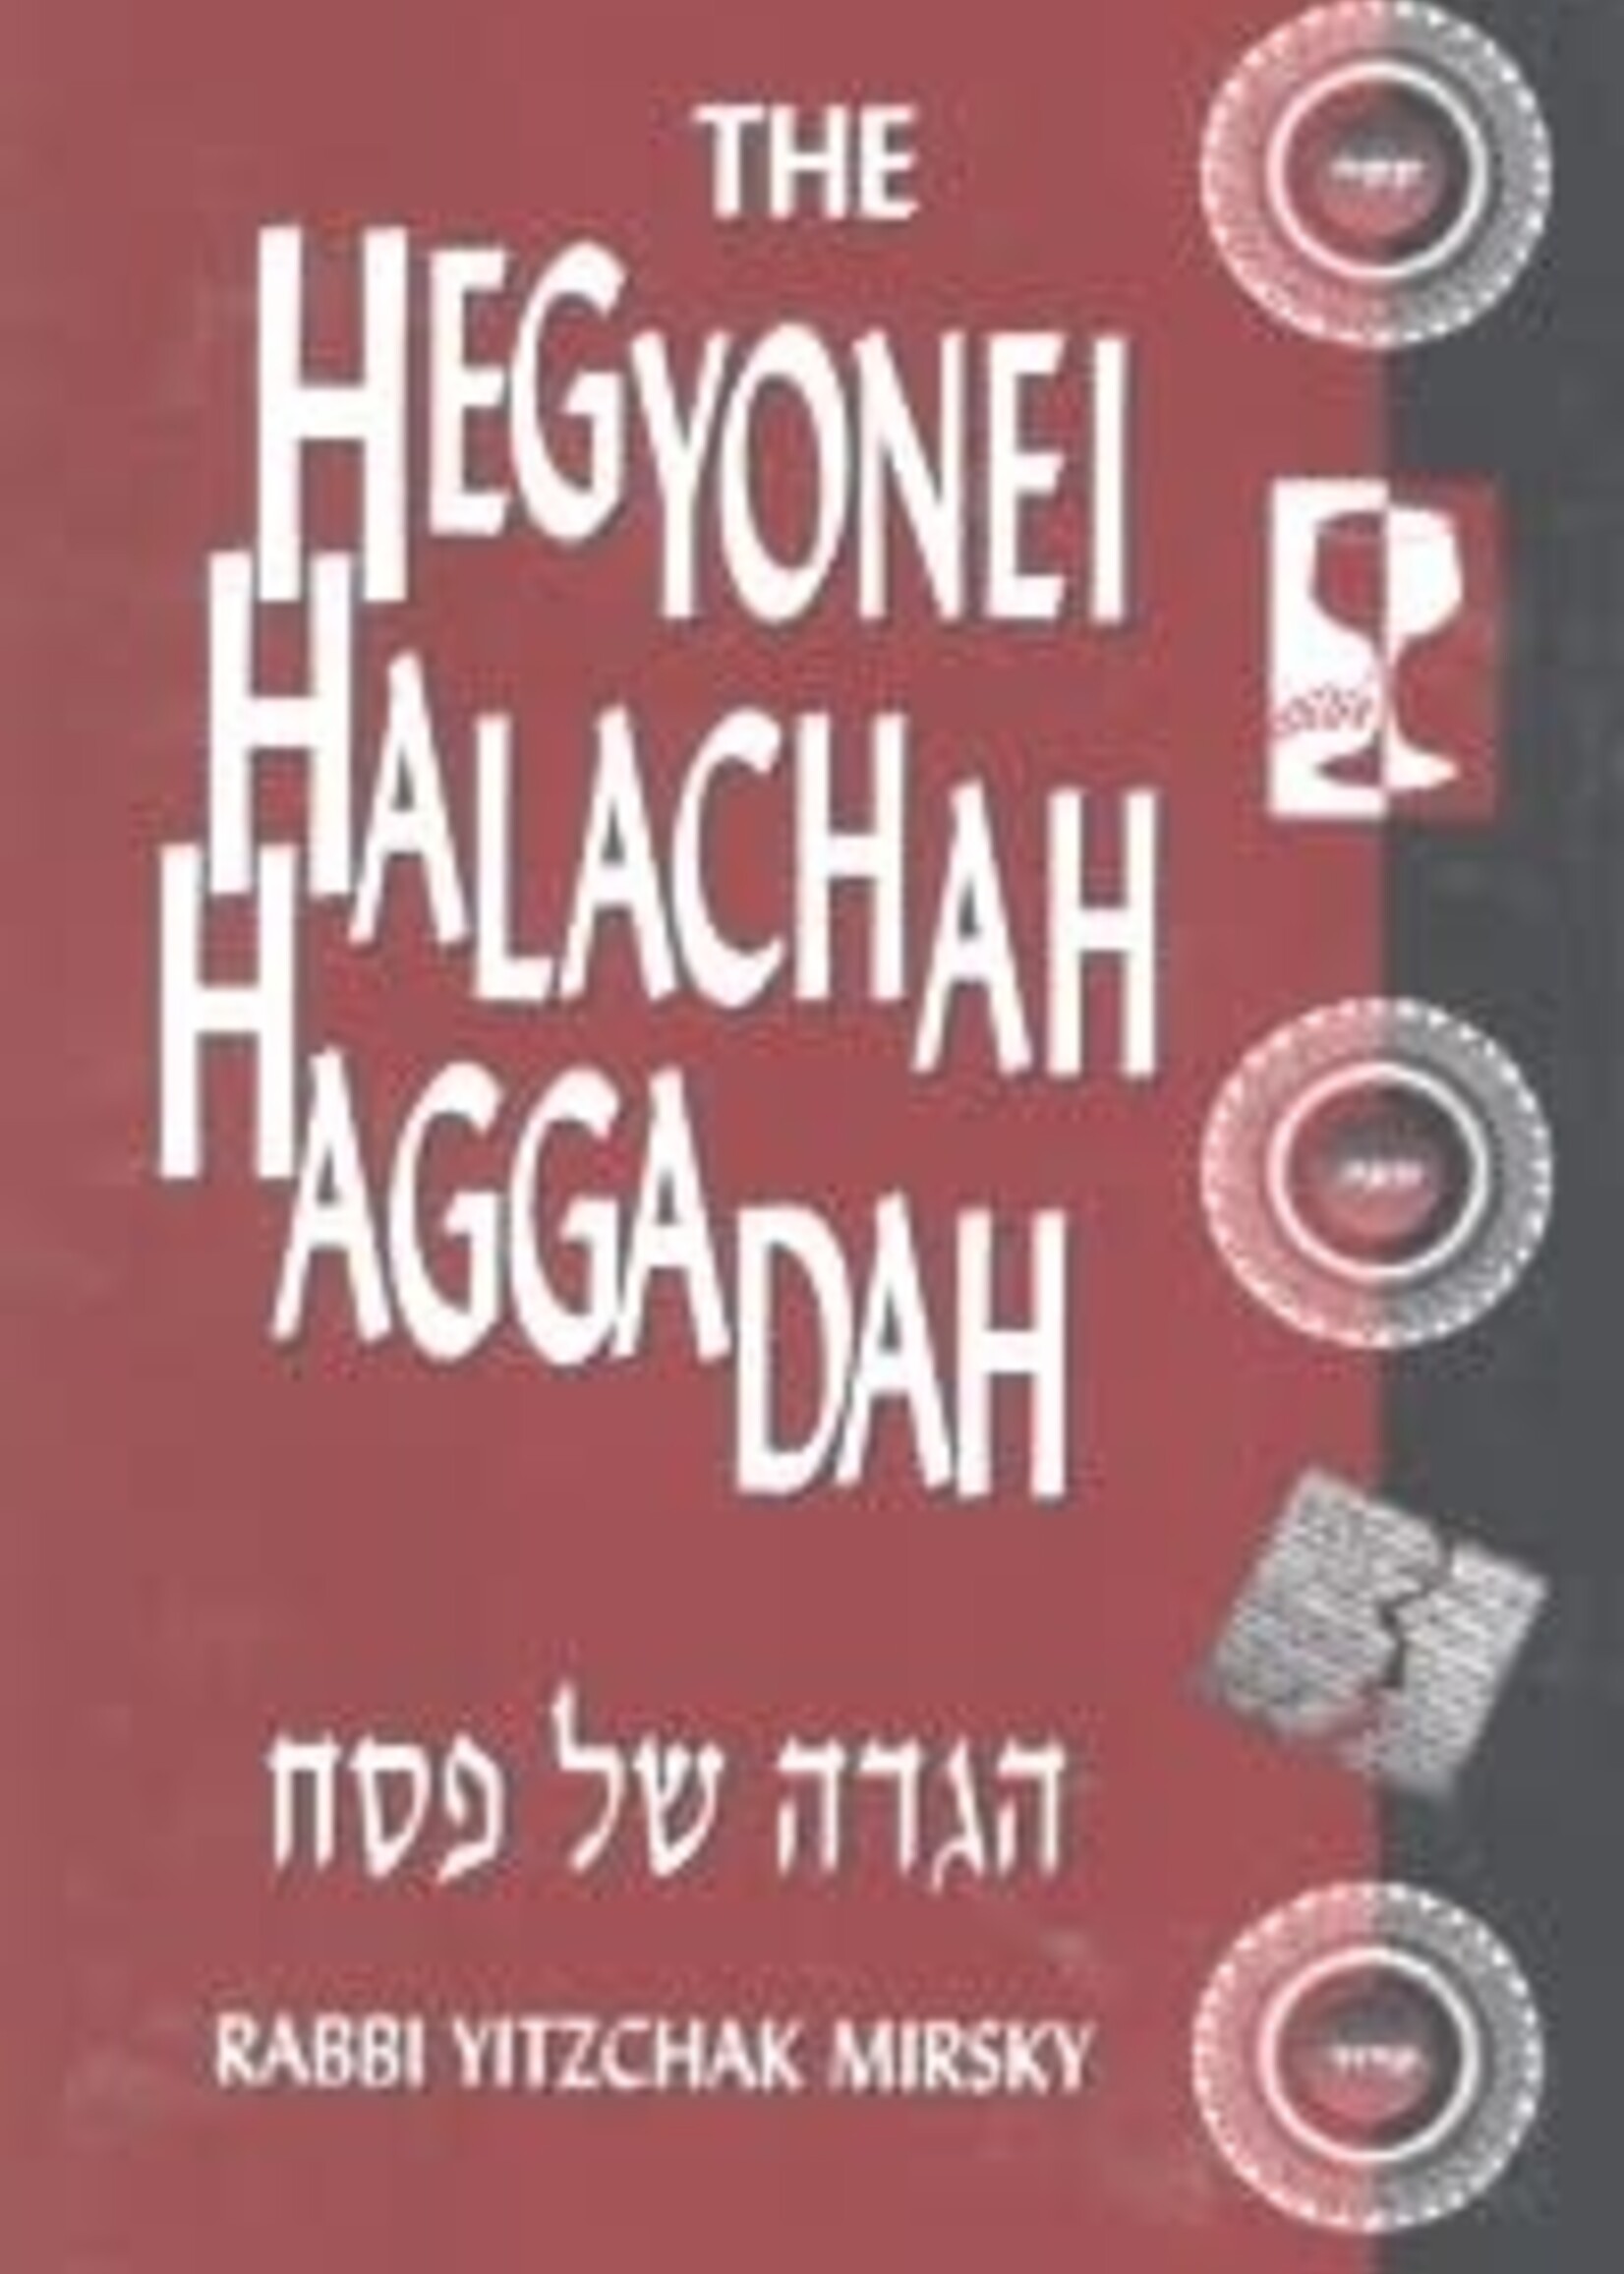 Rabbi Yitzchak Mirsky The Hegyonei Halachah Haggadah